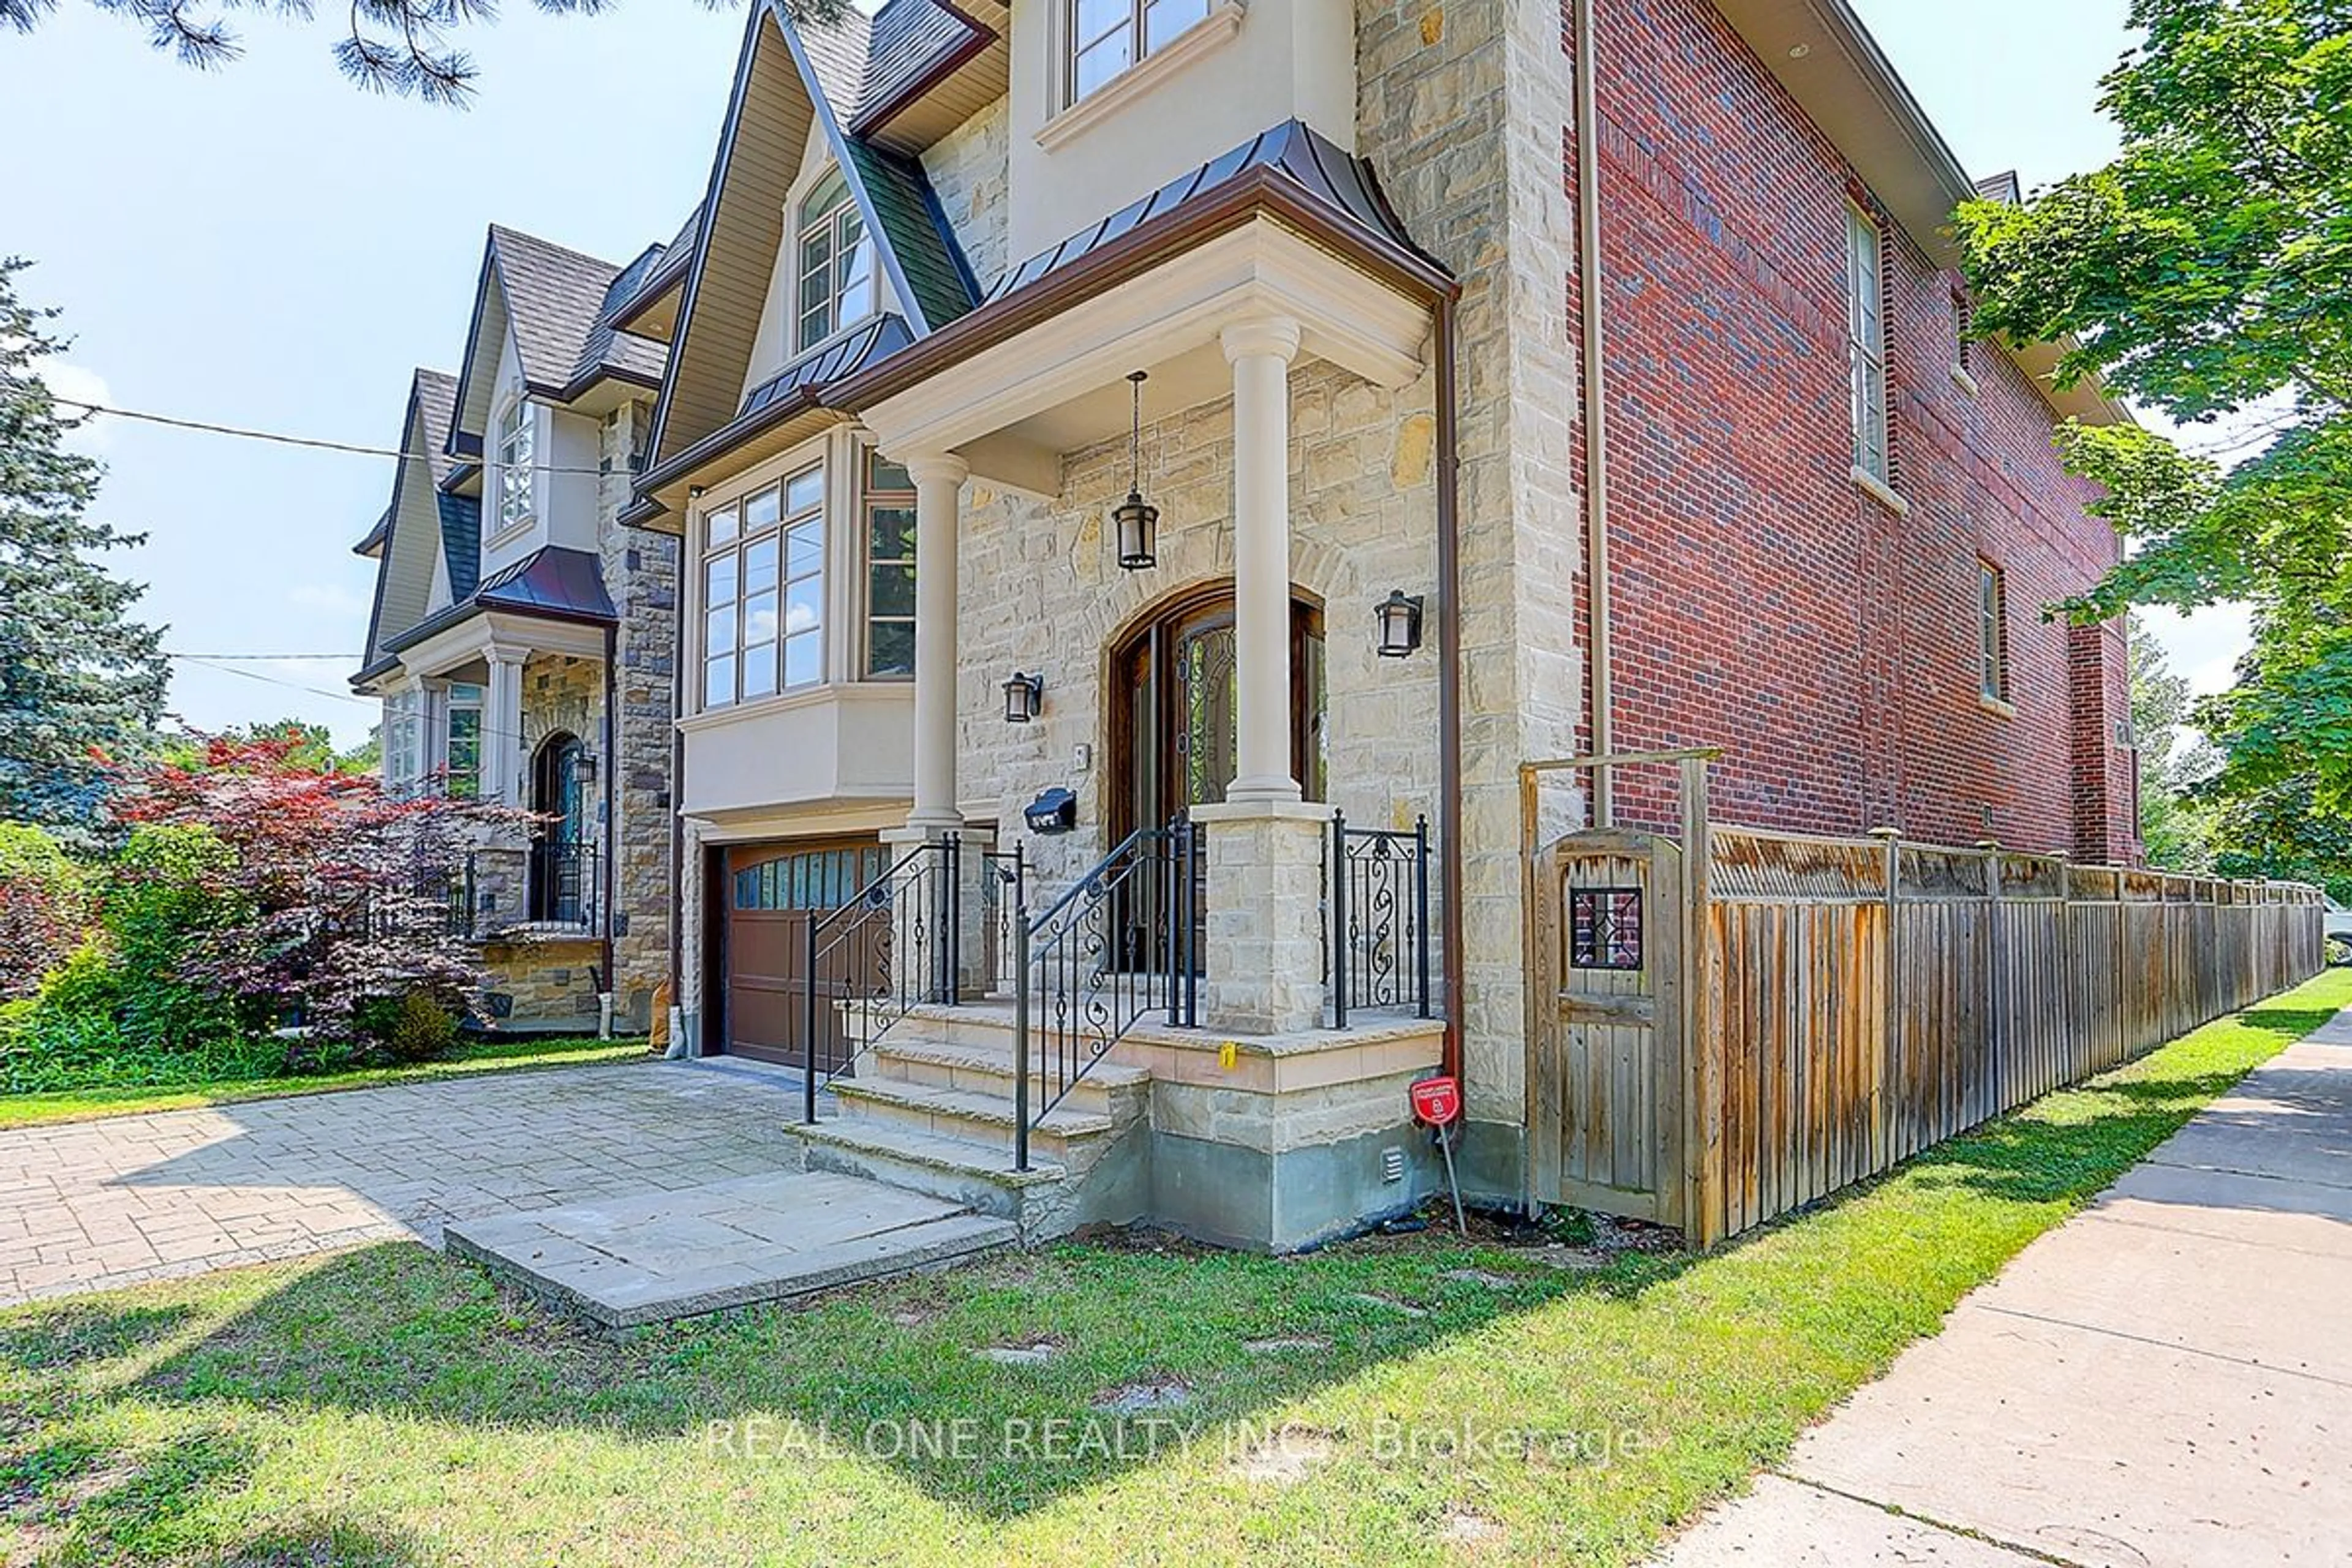 Home with brick exterior material for 297 Churchill Ave, Toronto Ontario M2R 1E5